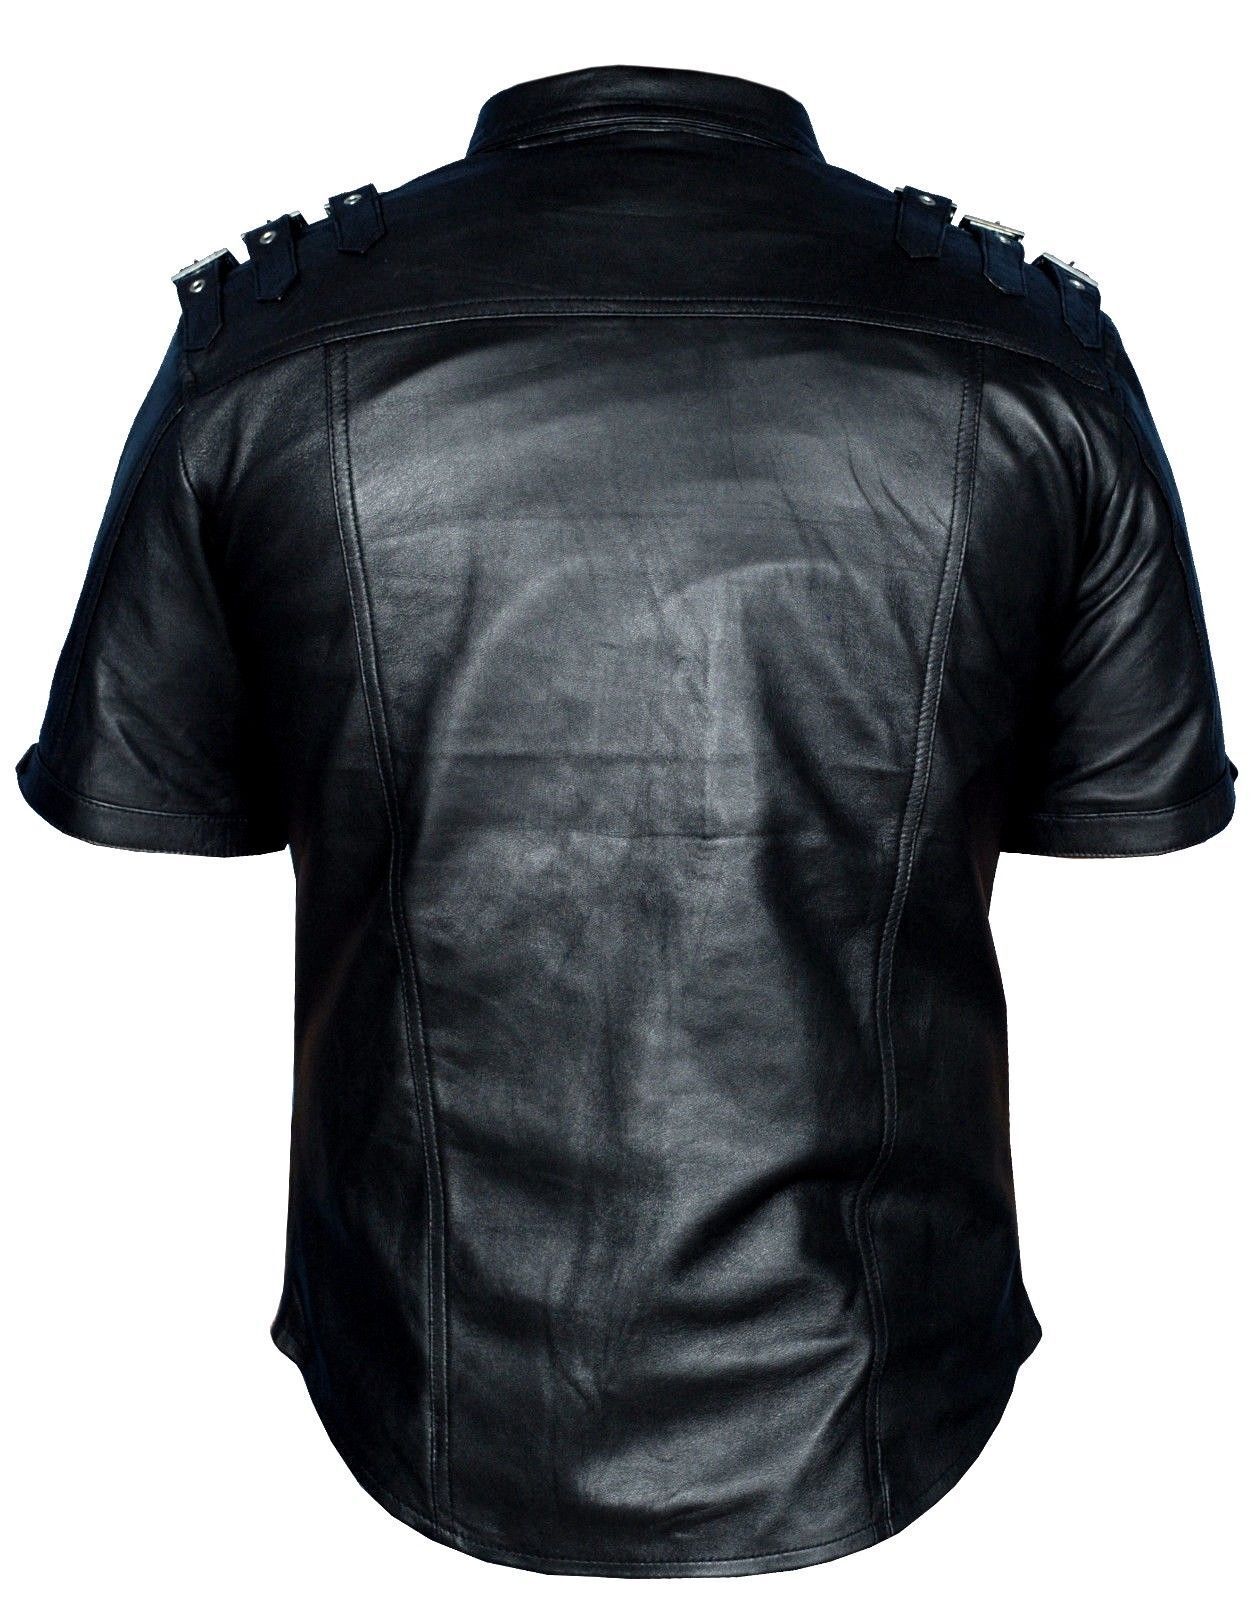 Mens Police Uniform Style Shirt Genuine Lambskin Soft Leather Shirt Hot BLUF GAY - PSHS-G-BLK